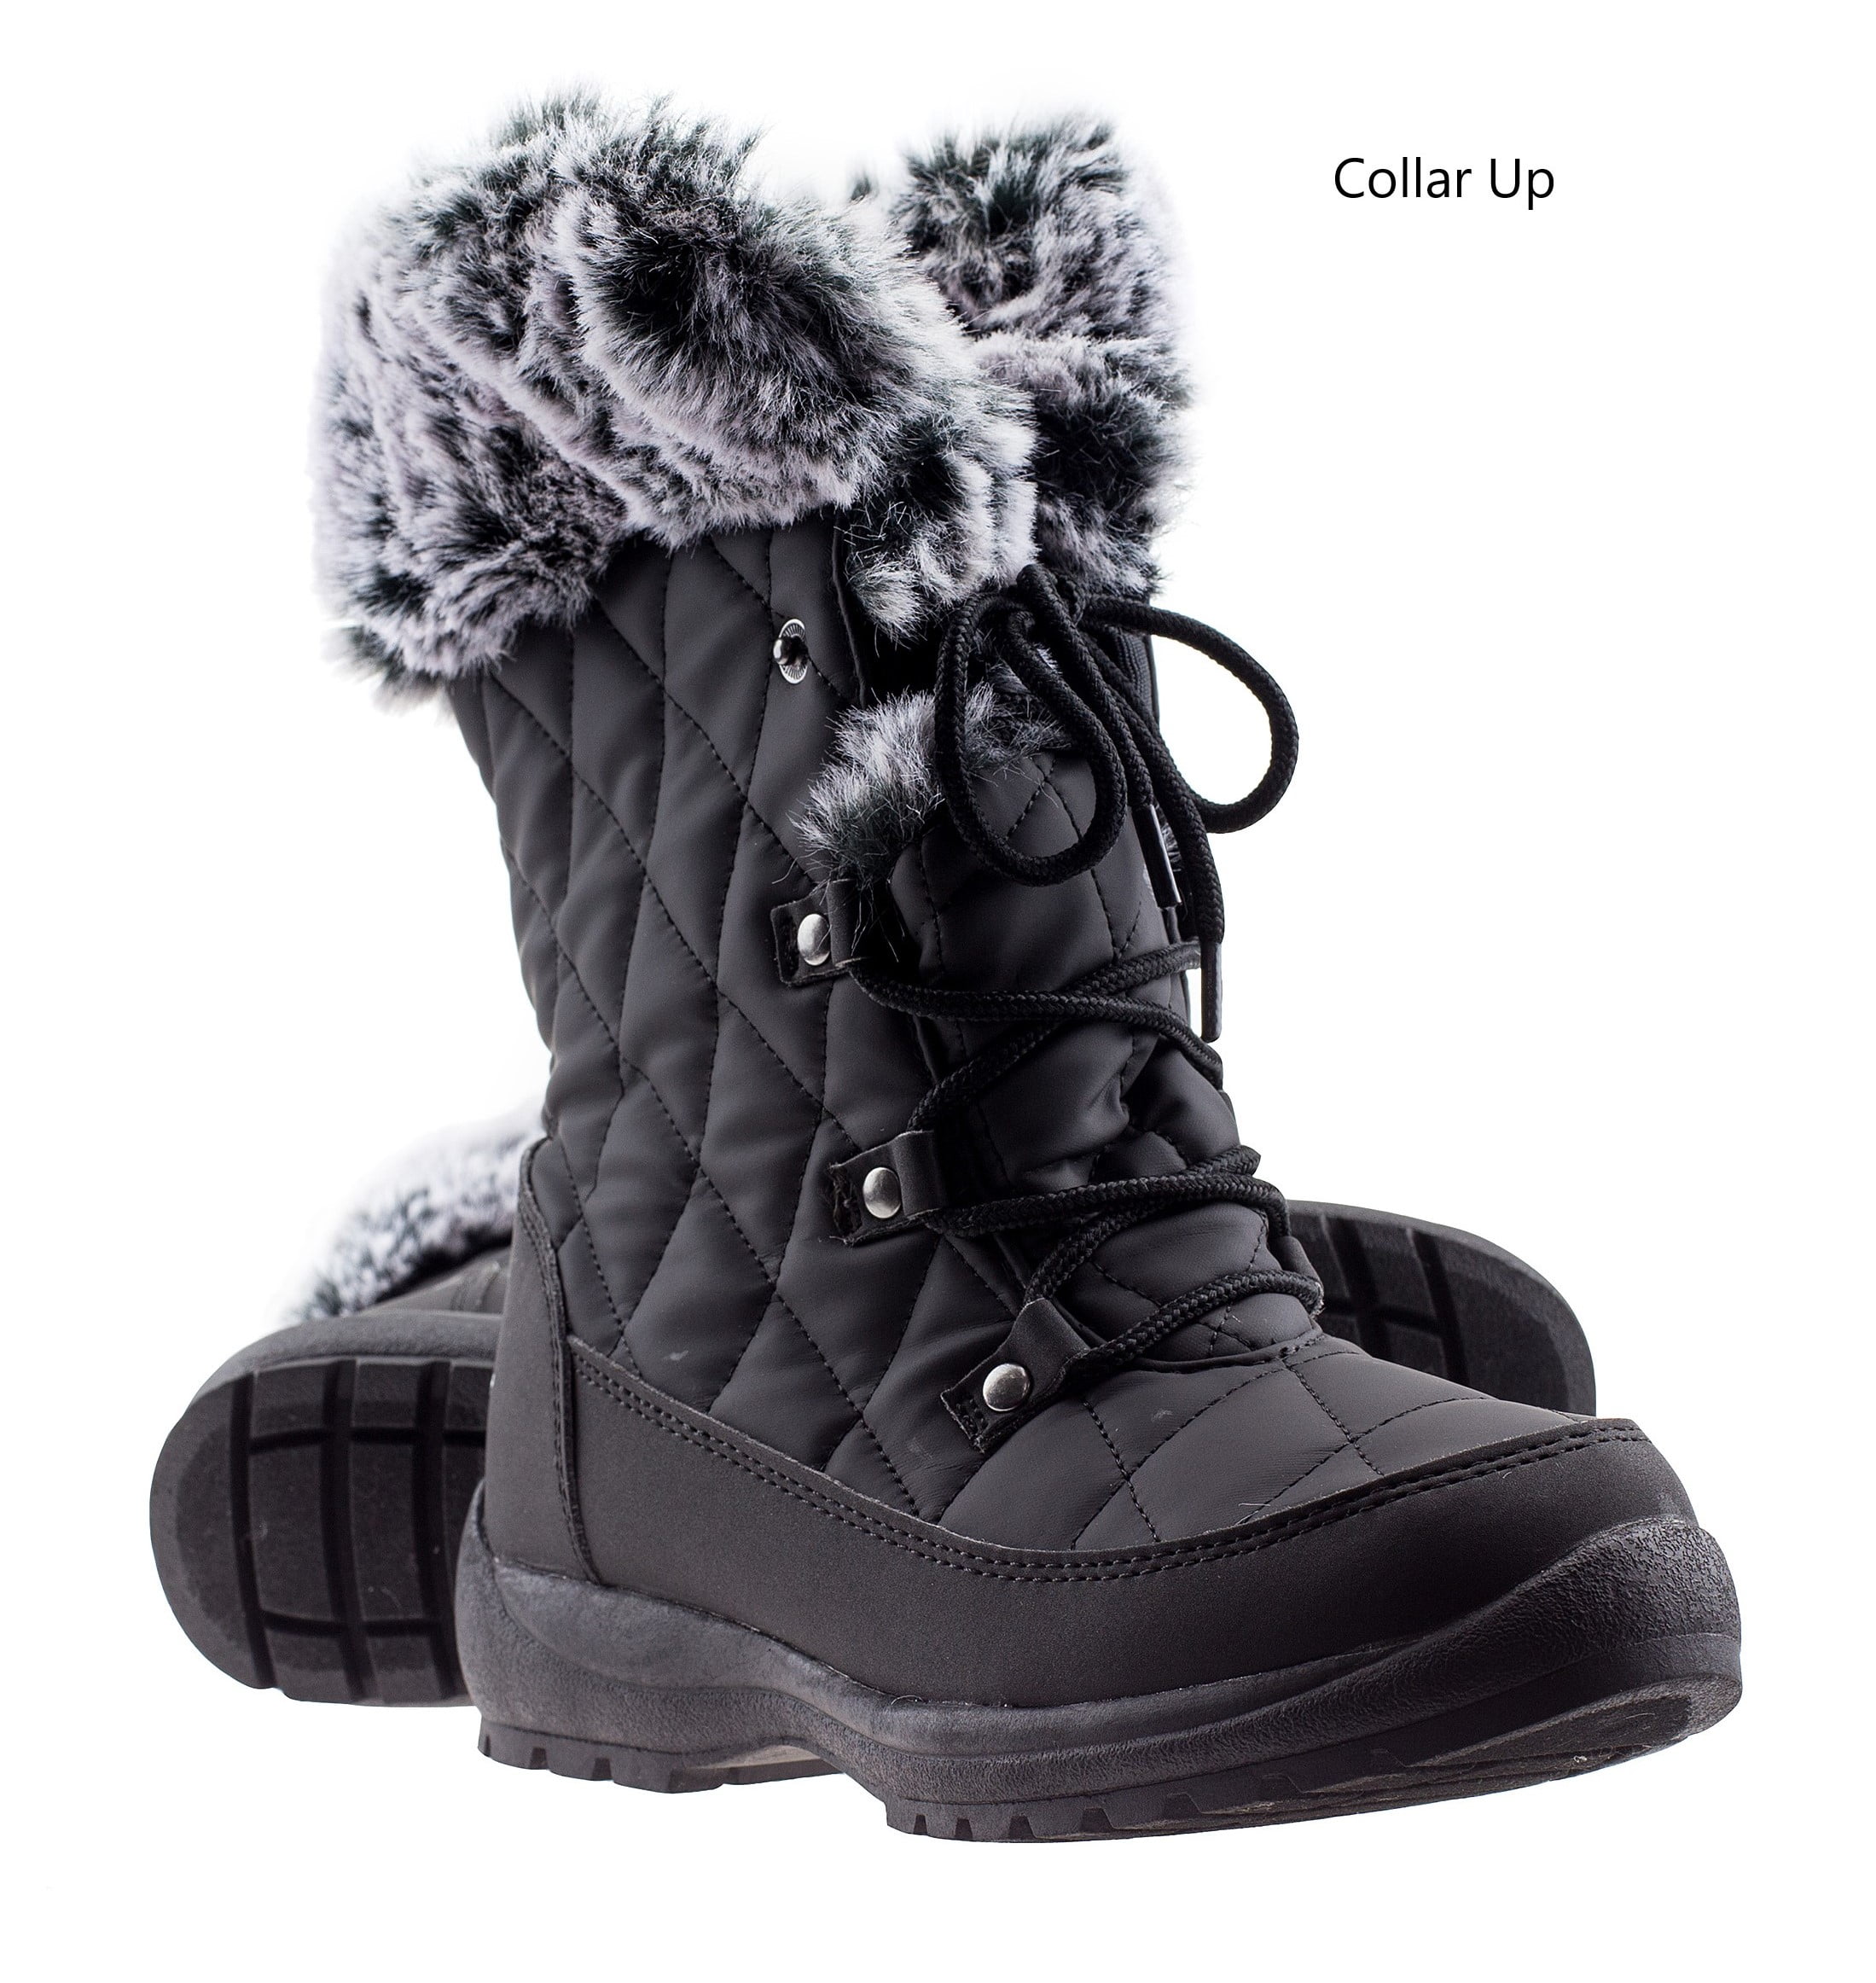 walmart waterproof winter boots